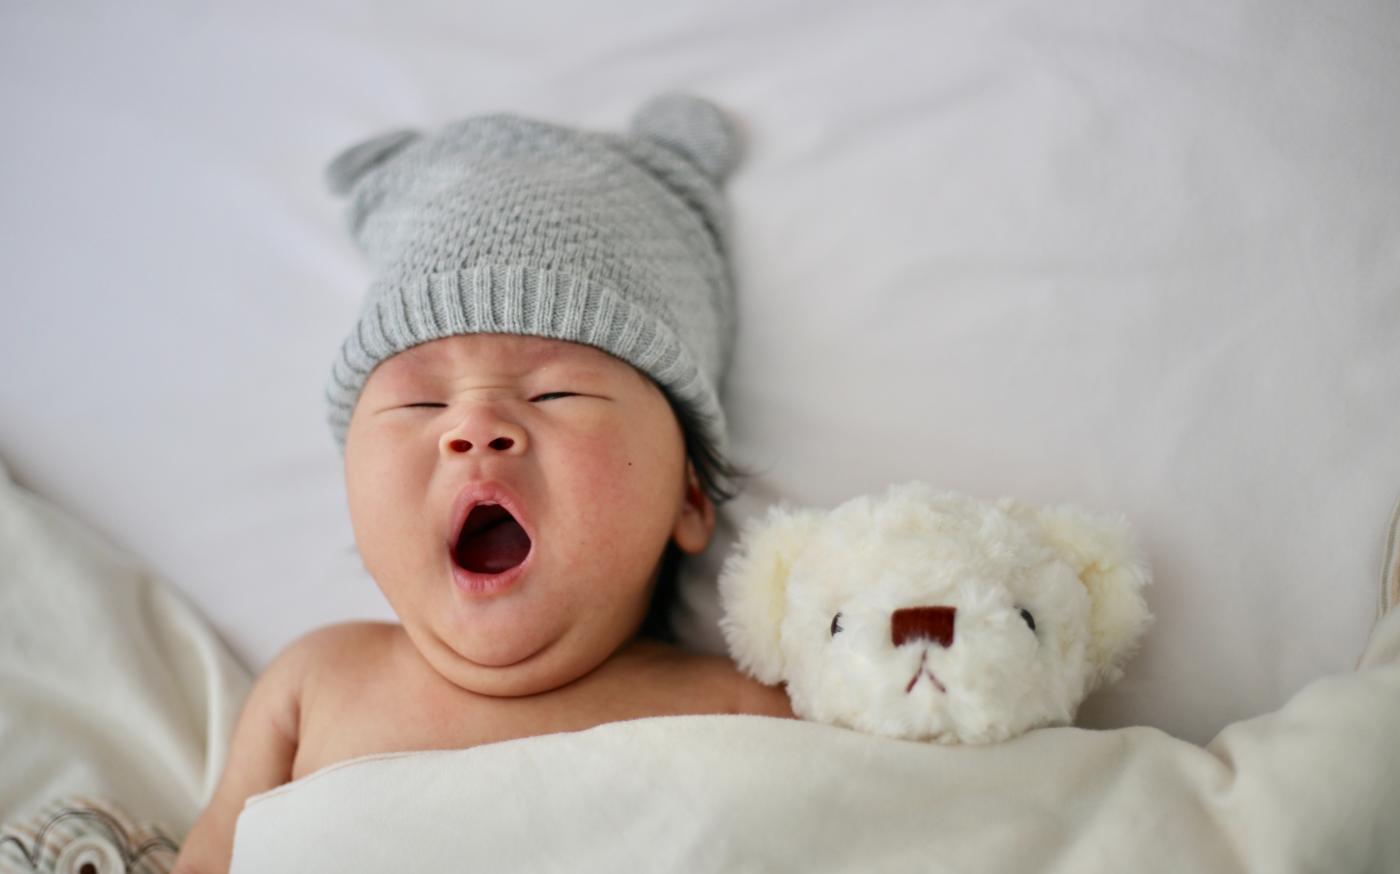 baby's gray knit hat by Minnie Zhou courtesy of Unsplash.